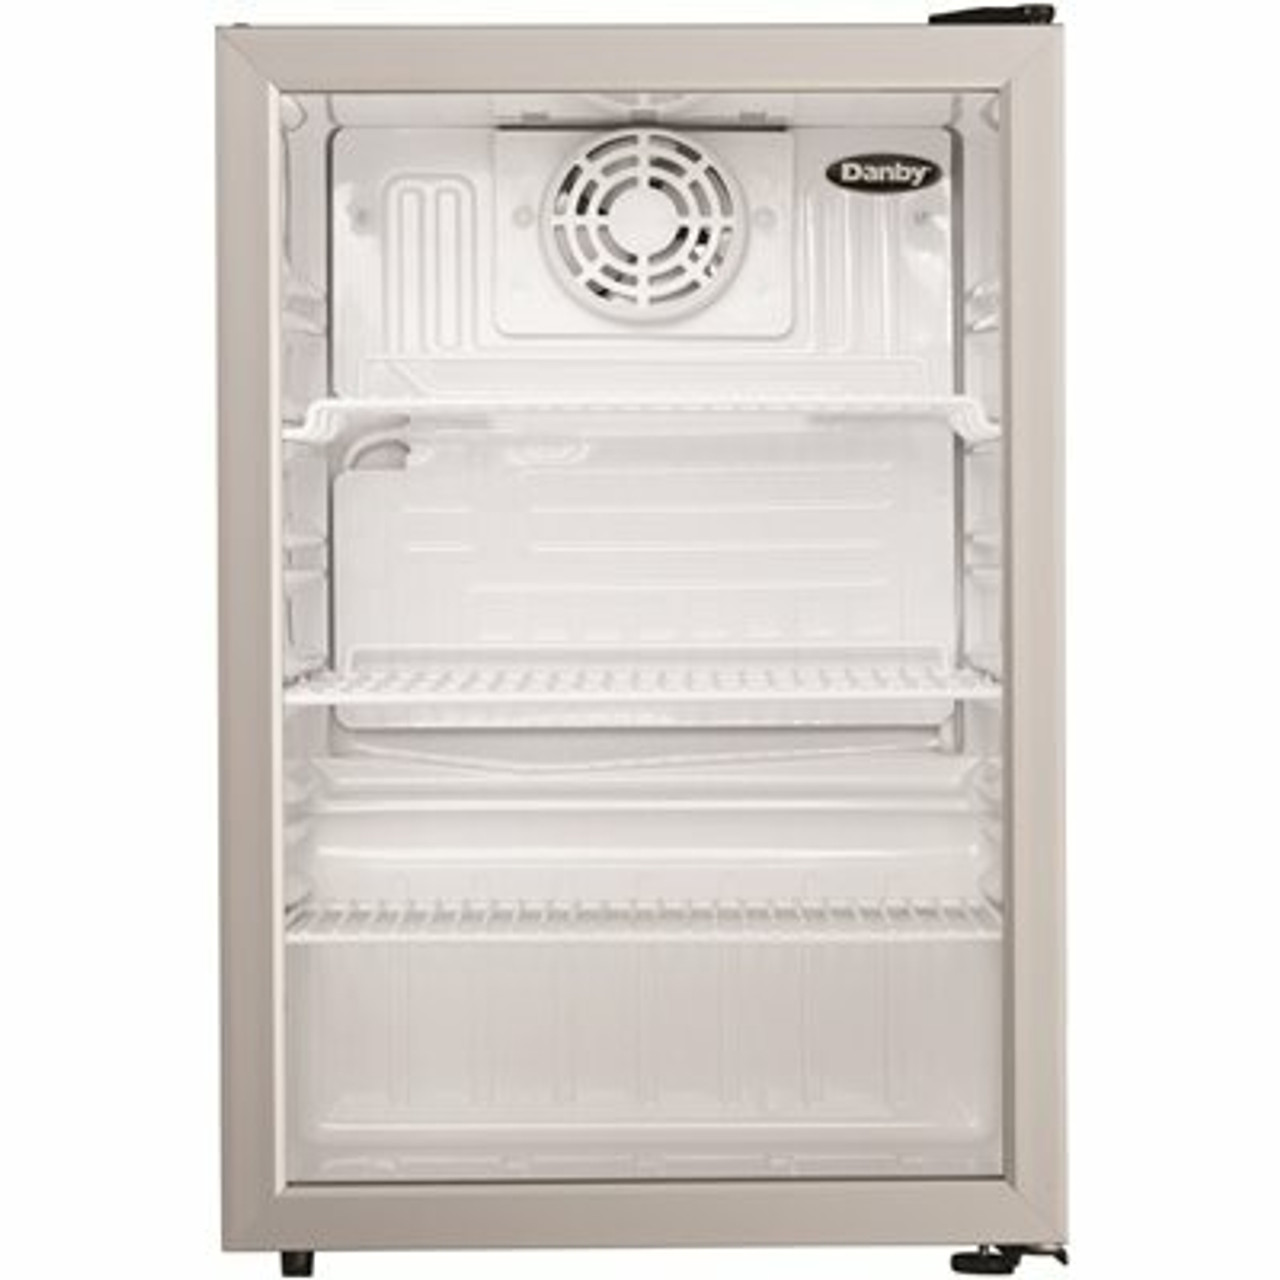 Danby 17.5 In. W 2.6 Cu. Ft. Commercial Refrigerator In Black